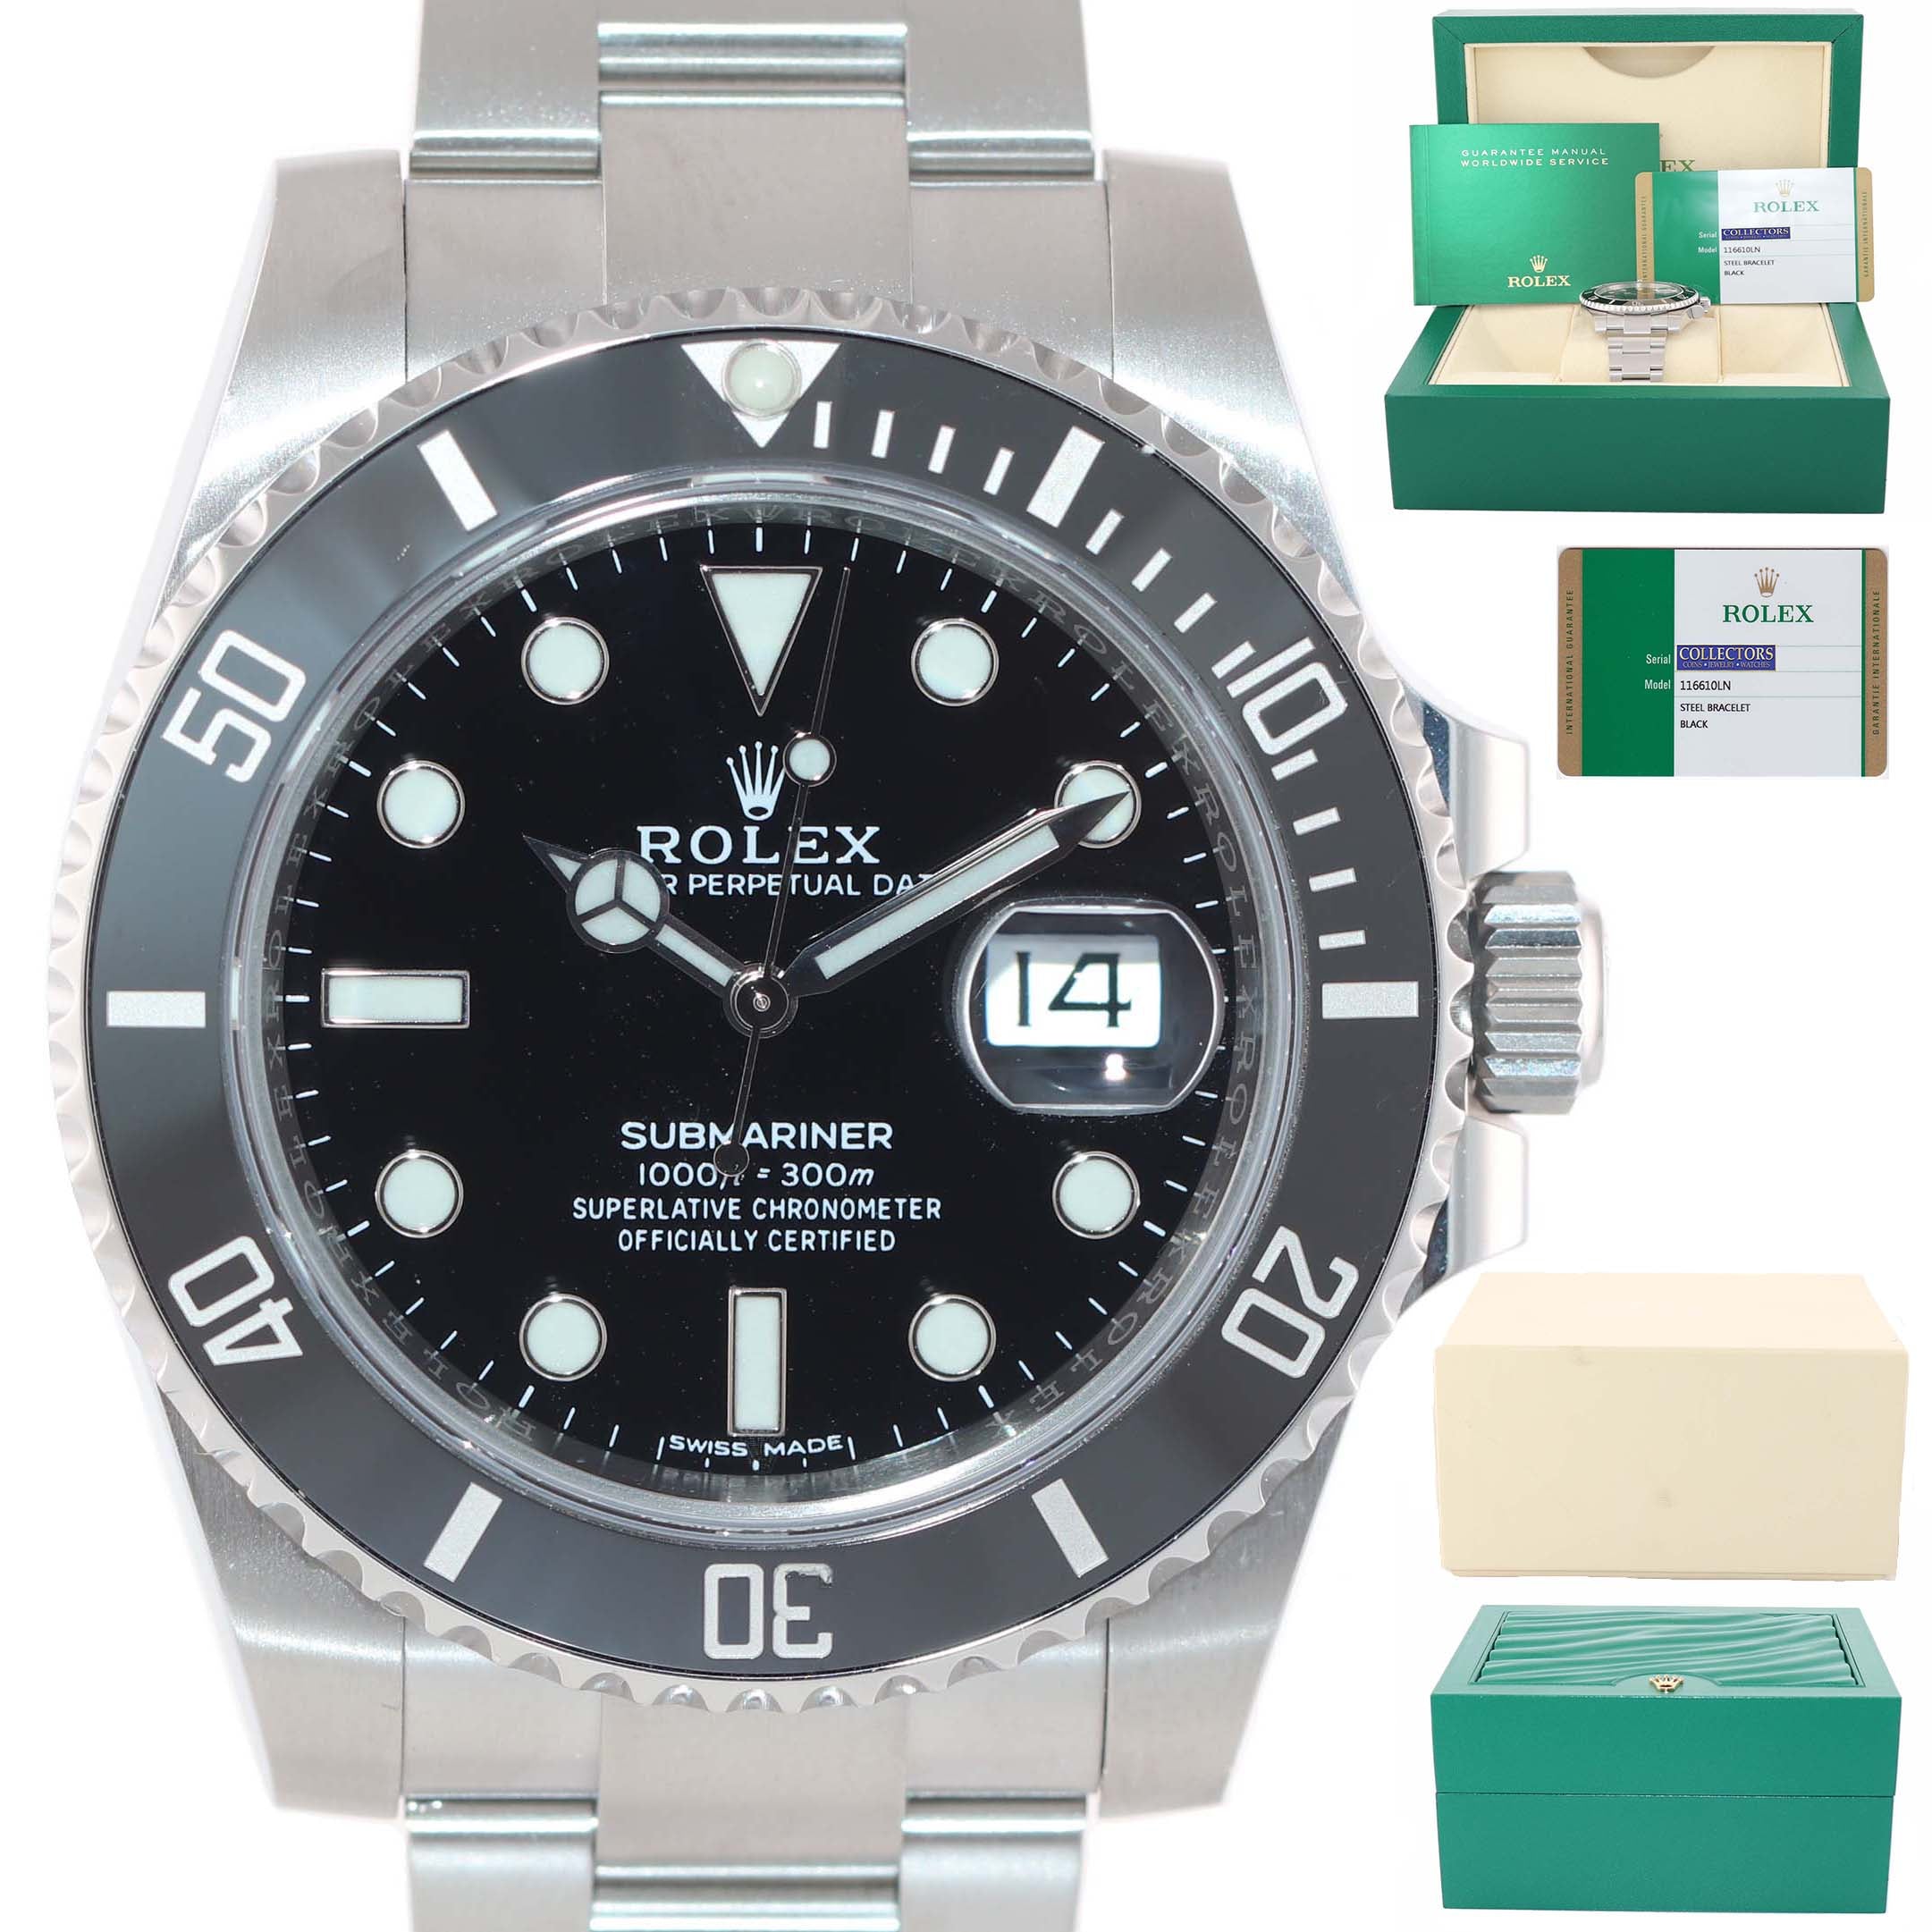 BRAND NEW 2019 PAPERS Rolex Submariner Date 116610 Steel Black Ceramic Watch